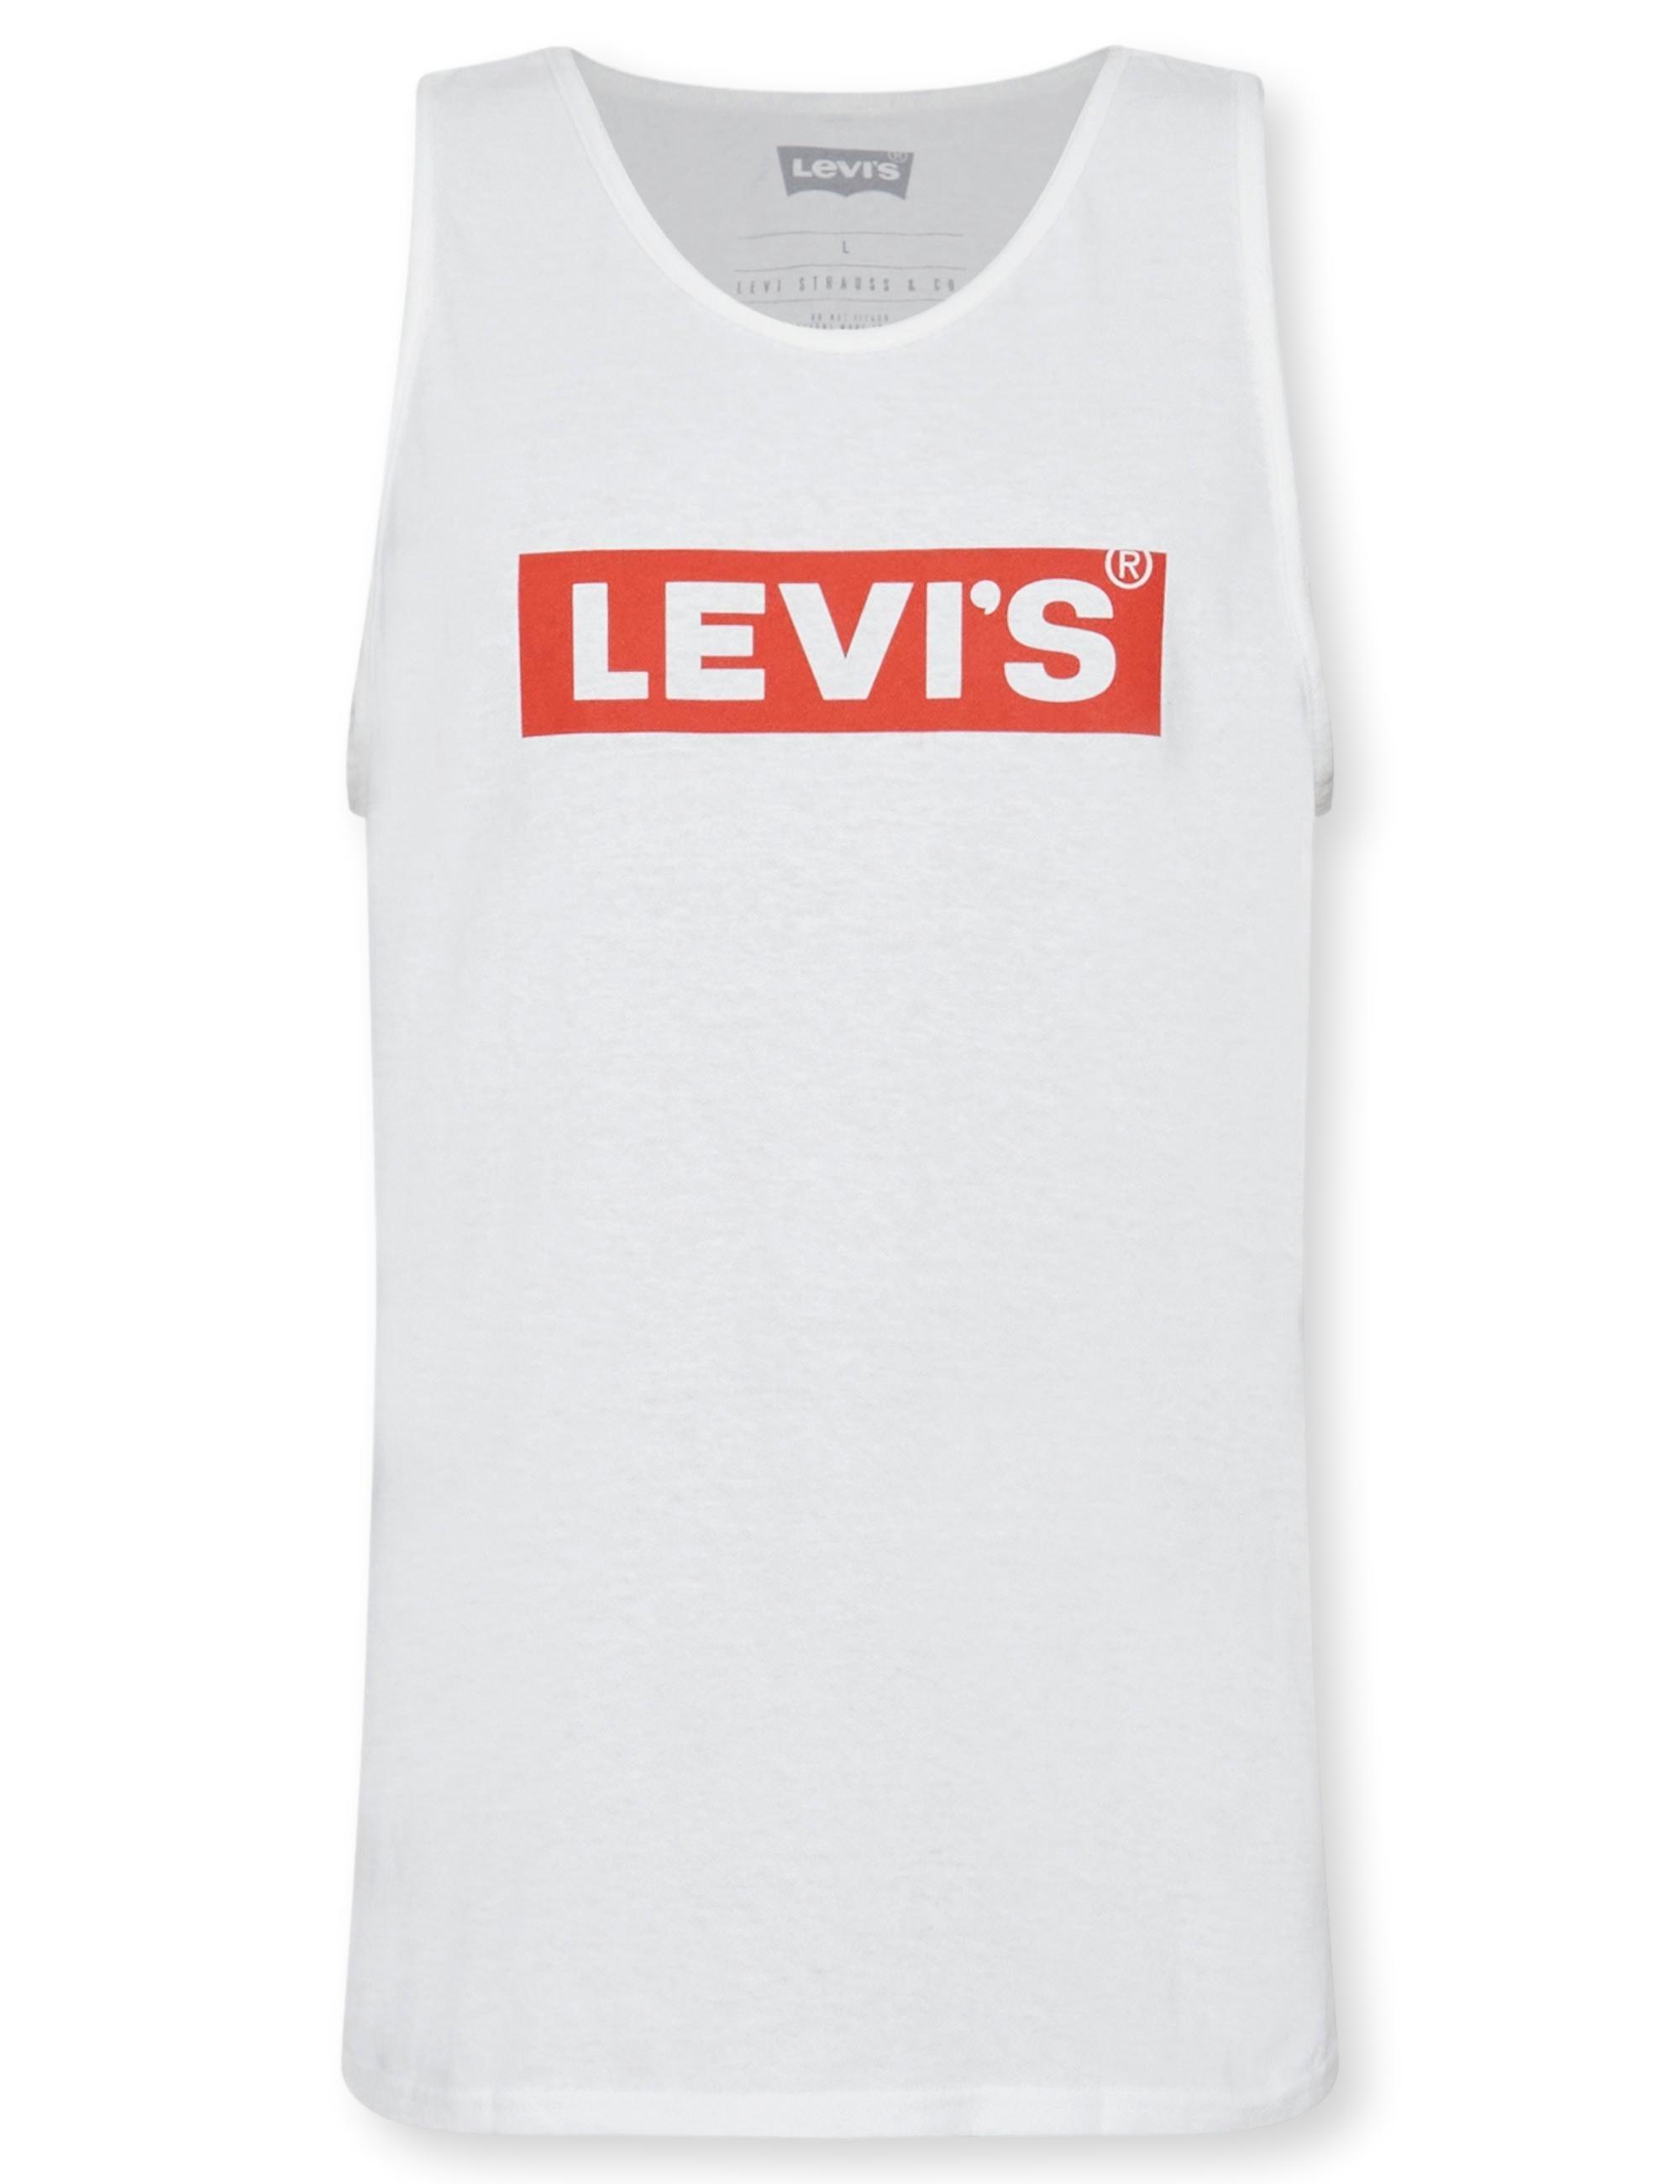 Levi's - Mens Tops - Levis Printed Singlet